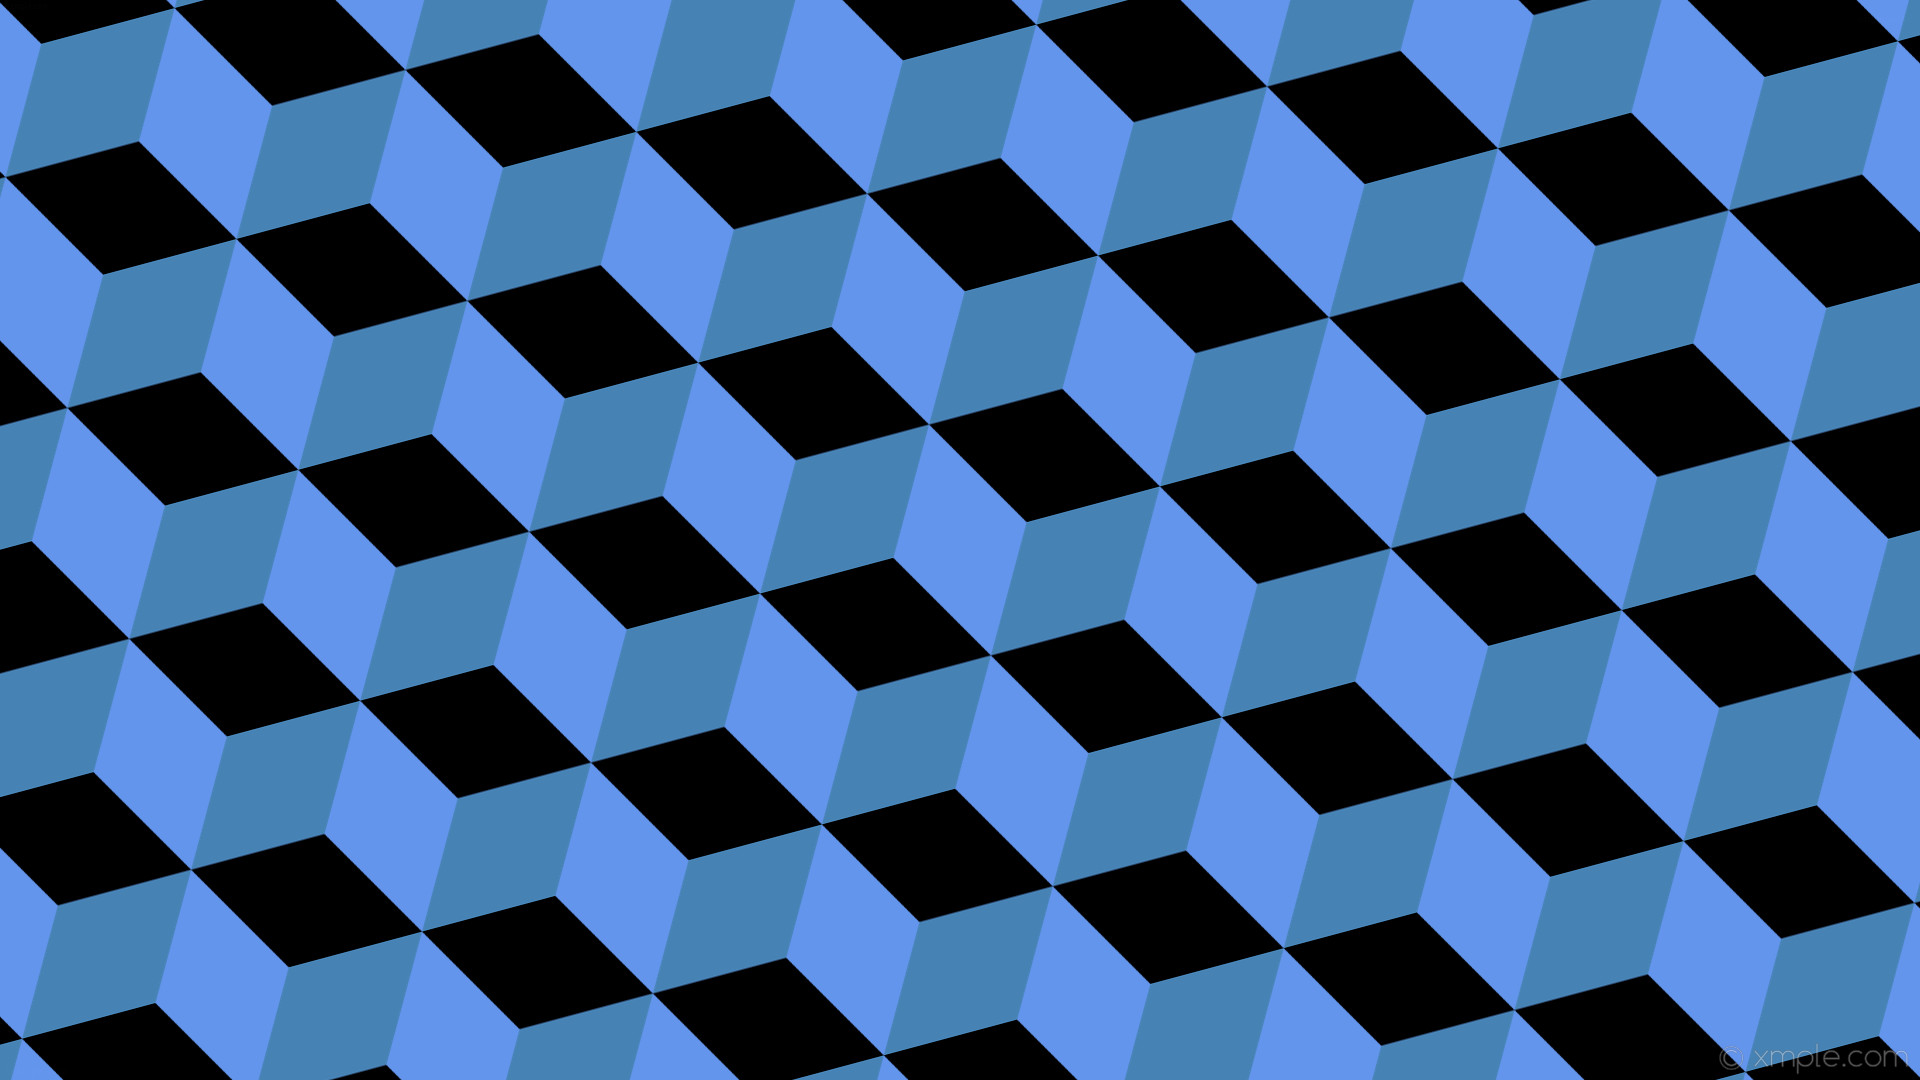 1920x1080 wallpaper black blue 3d cubes cornflower blue steel blue #6495ed #4682b4  #000000 285